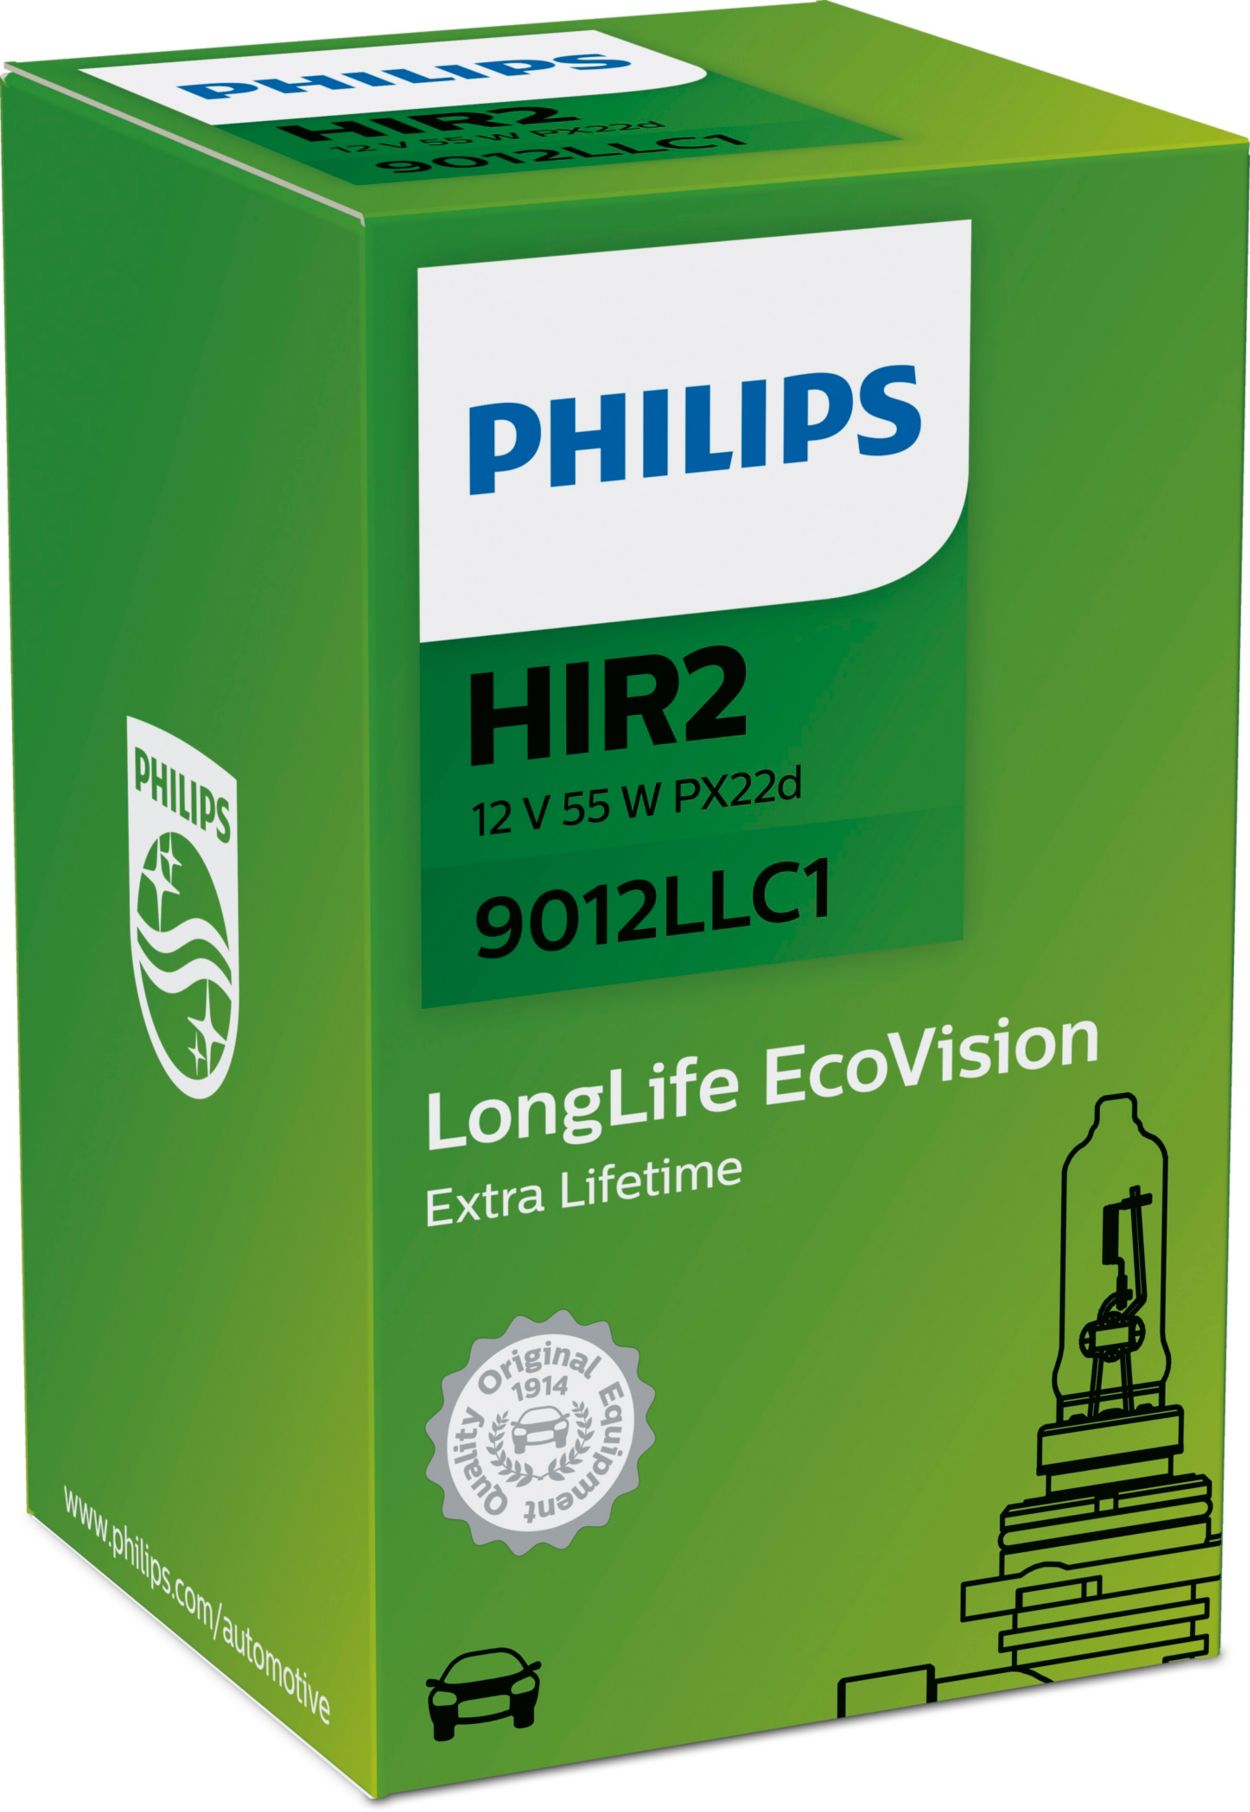 LongLife EcoVision car headlight bulb 9012LLC1